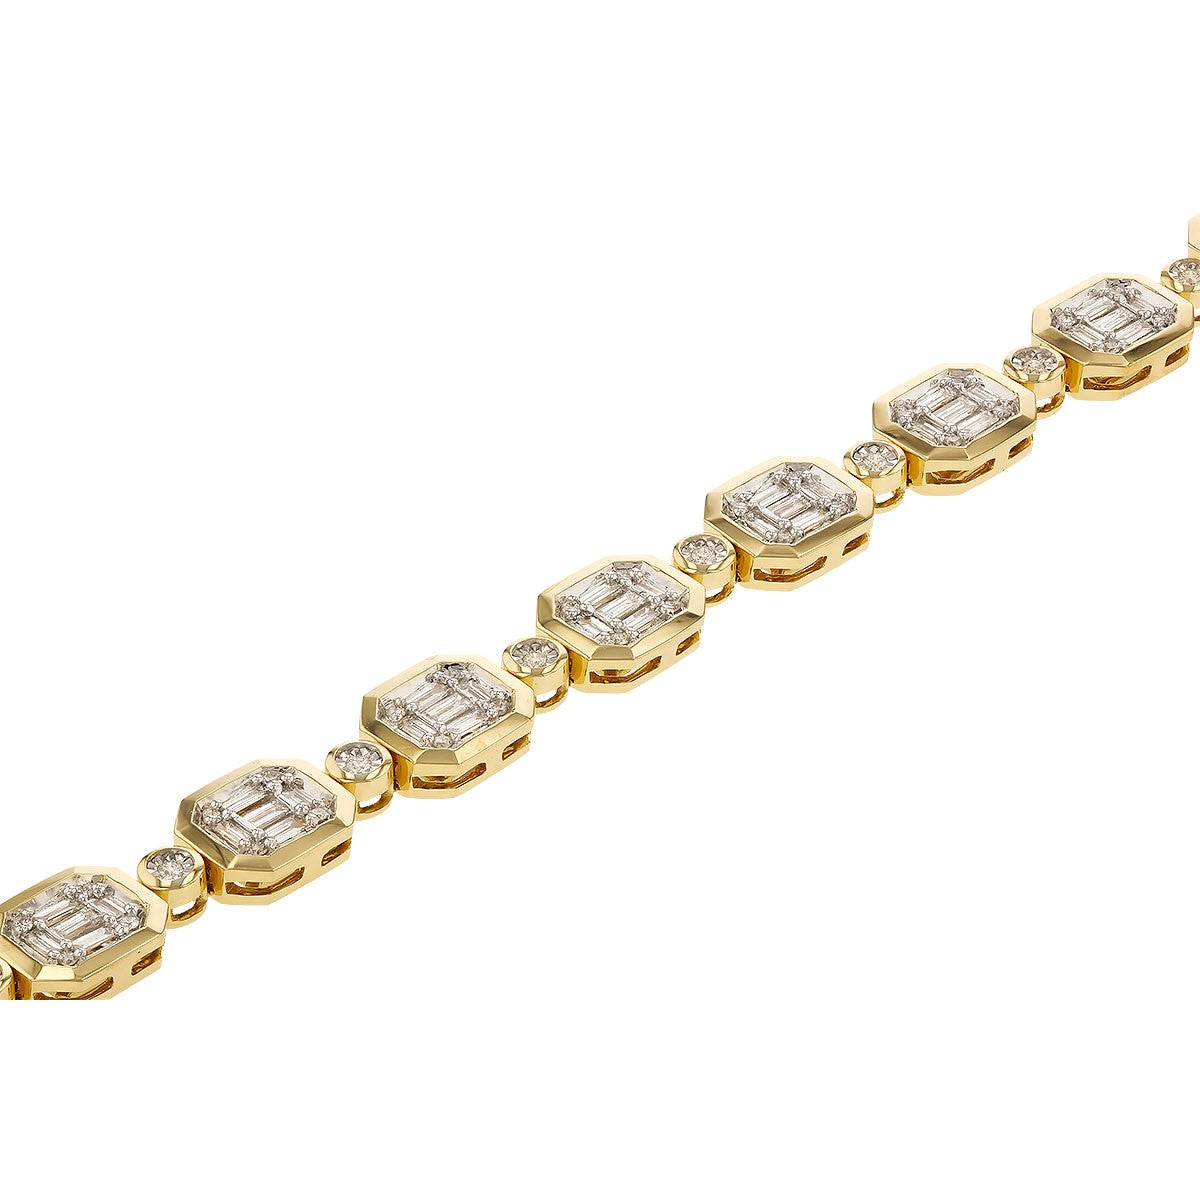 Allison Kaufman Co. 14KY Diamond Bracelets B1423